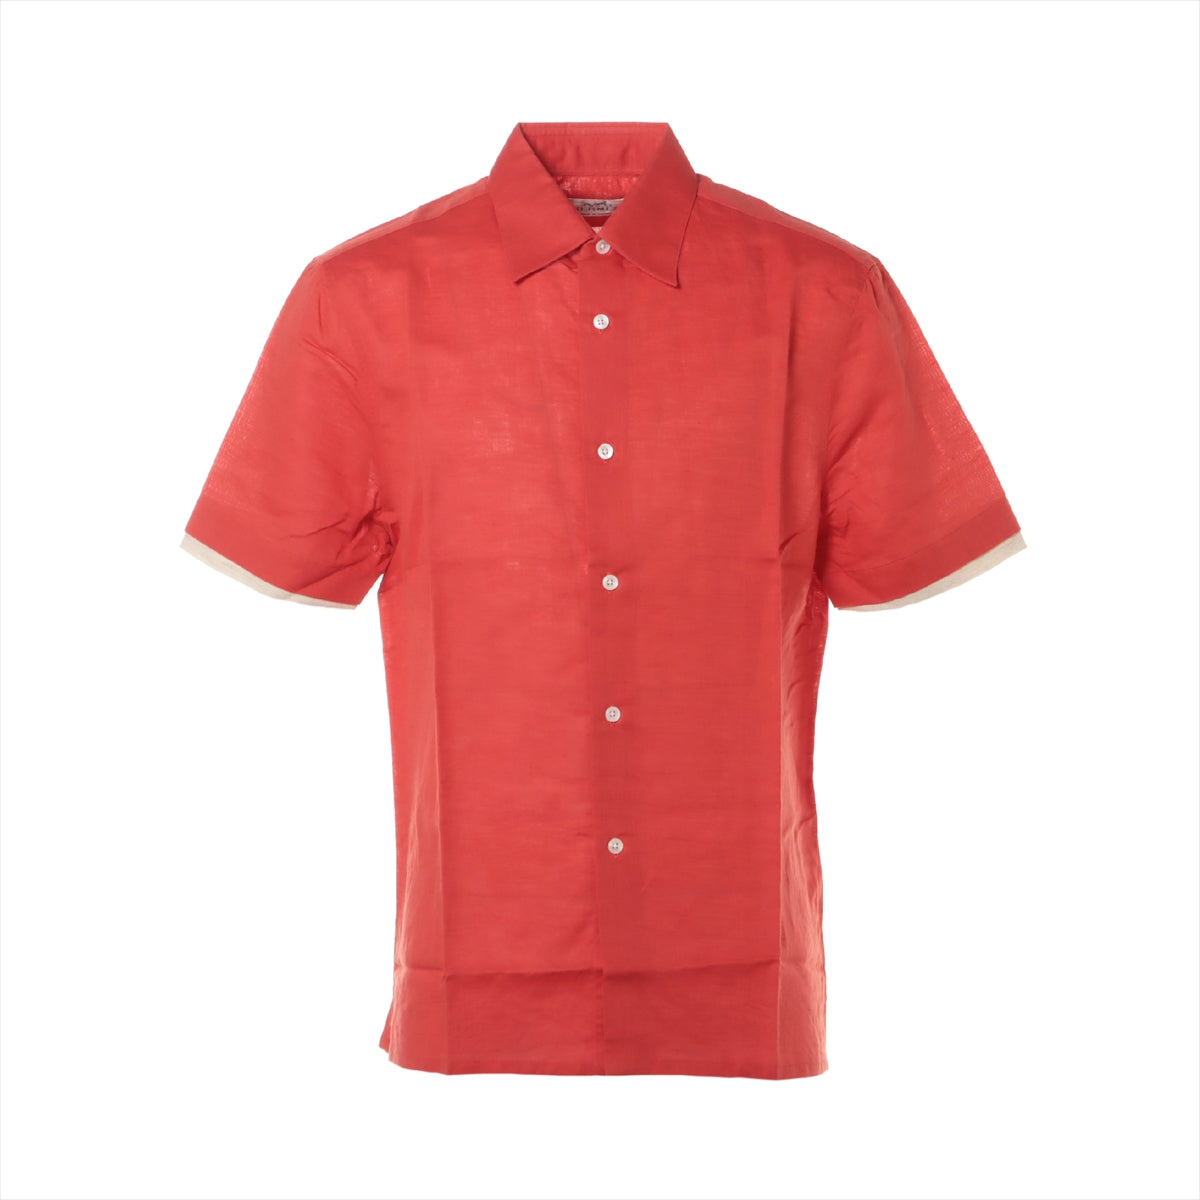 Hermès Cotton & linen Shirt 39 Men's Red  Short sleeves